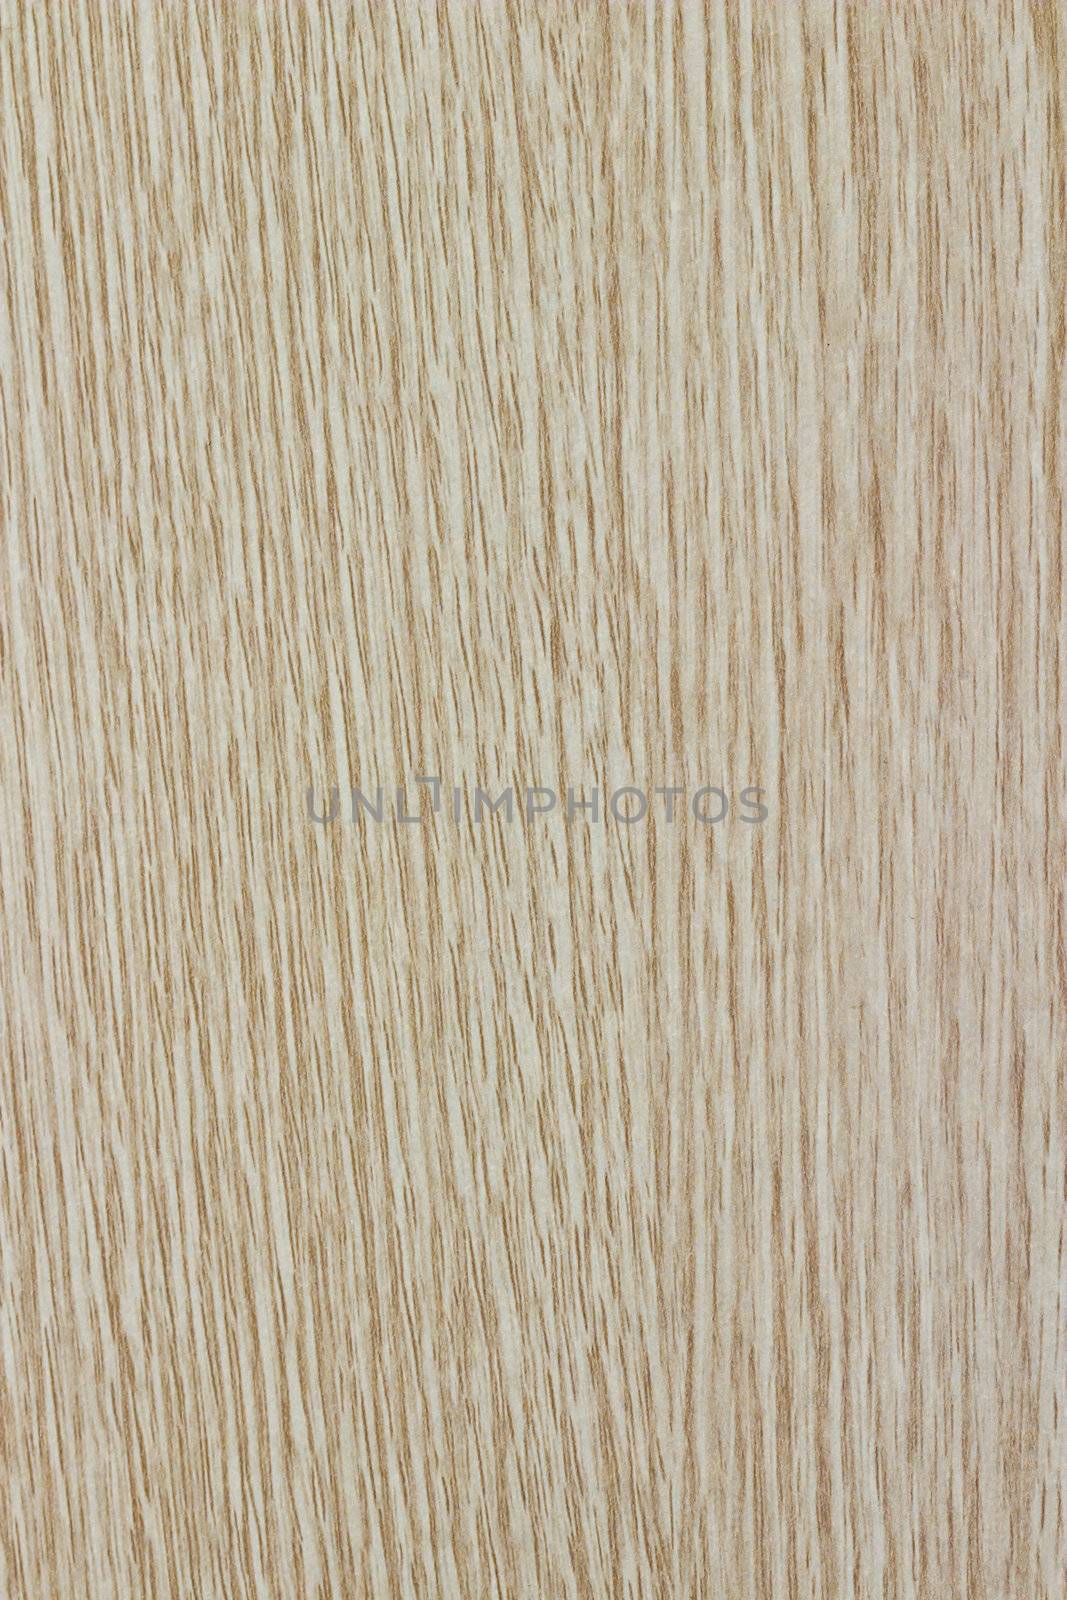 wood polywood texture background by bajita111122